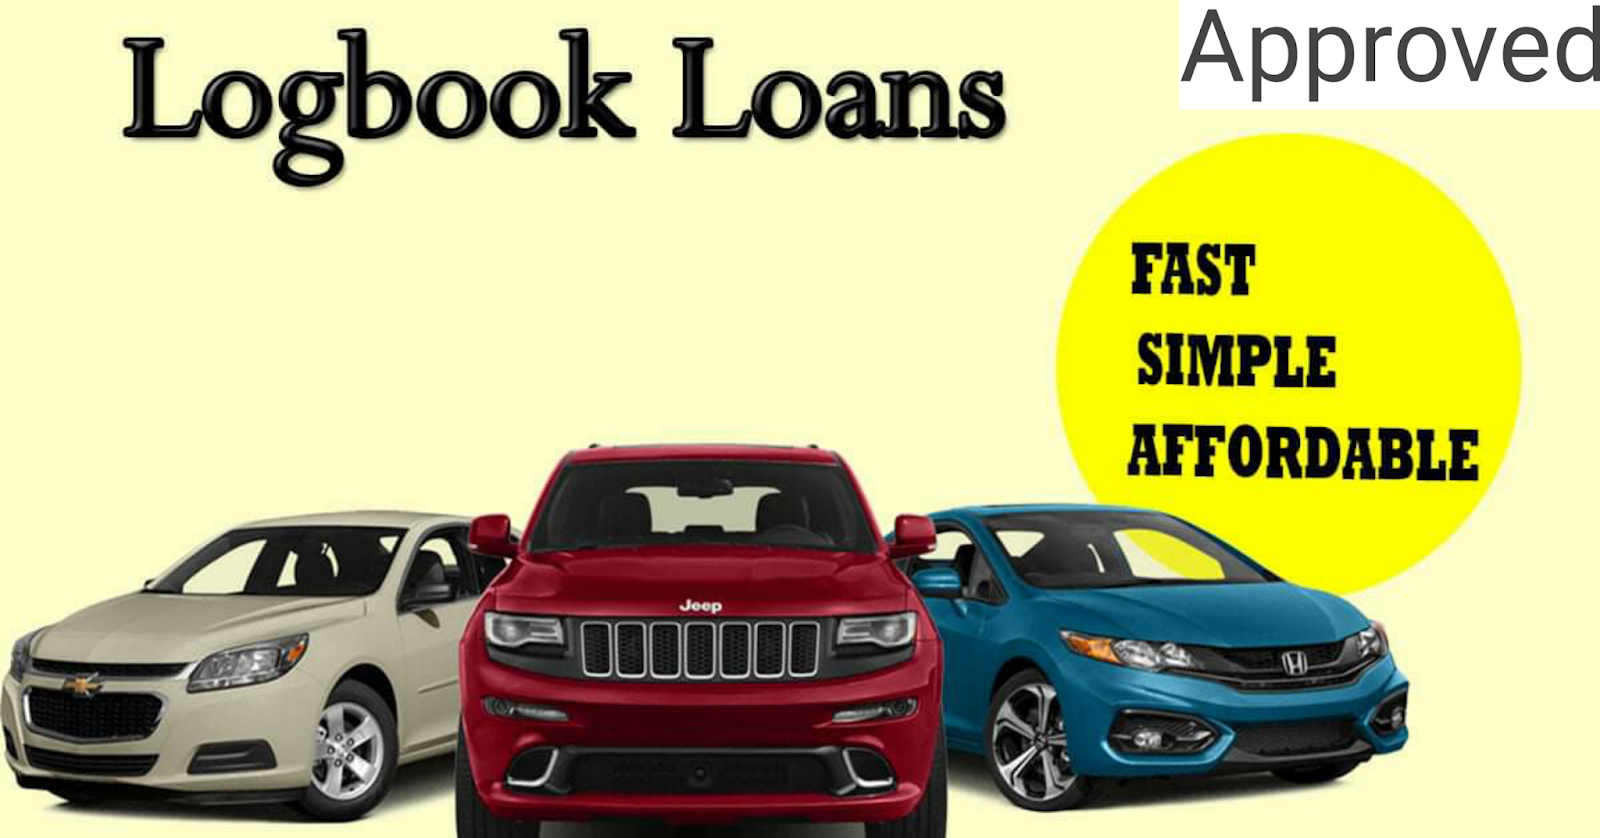 11 Car Logbook Loan Givers - Loans Kenya